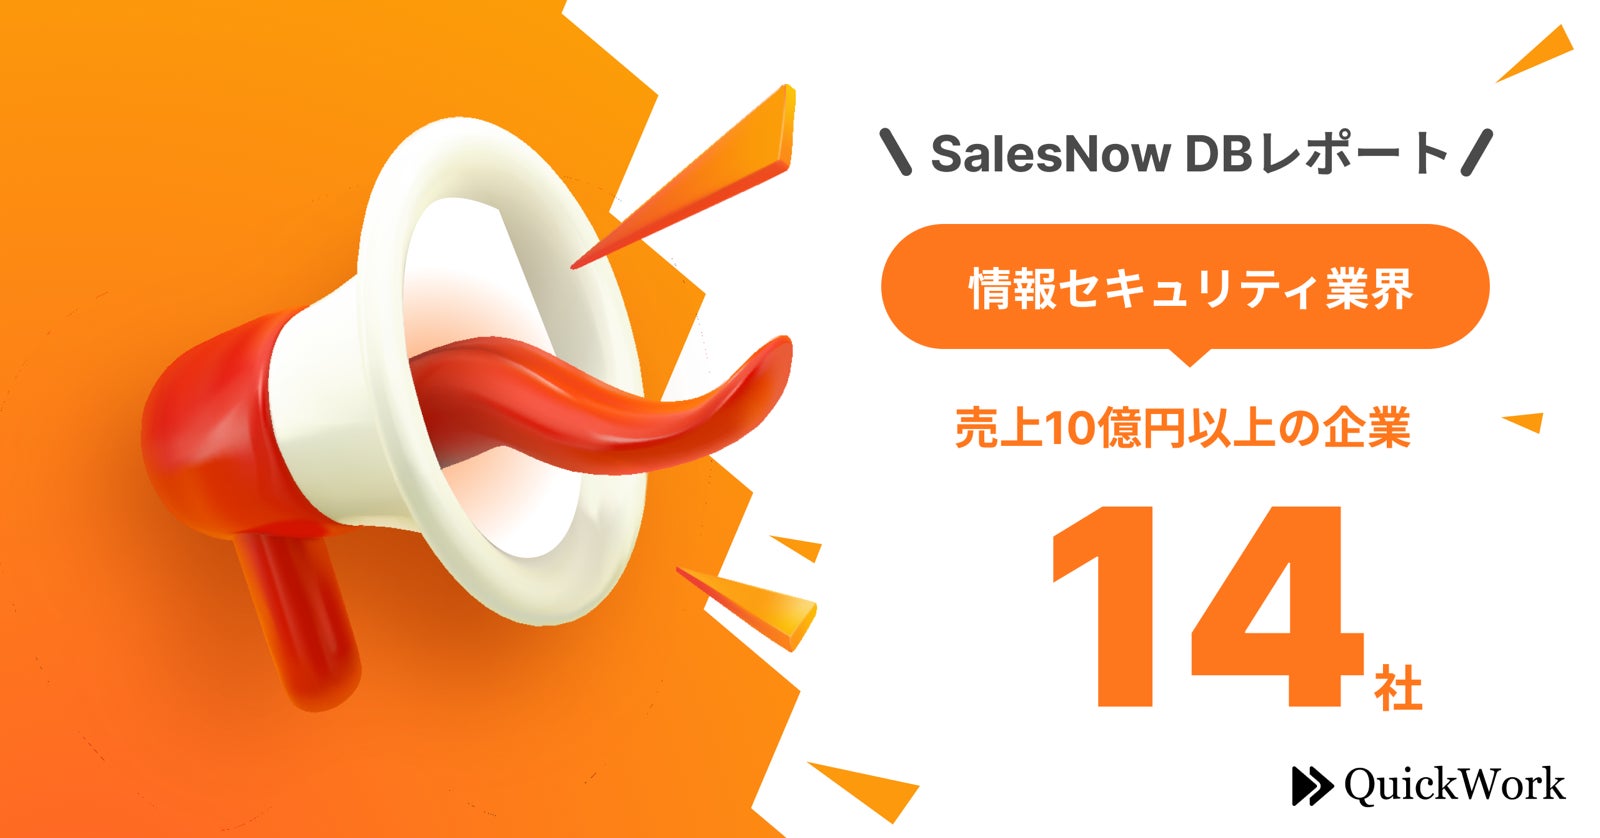 【SalesNow DBレポート】売上10億円以上の情報セキュリティ企業14社をピックアップのサブ画像1